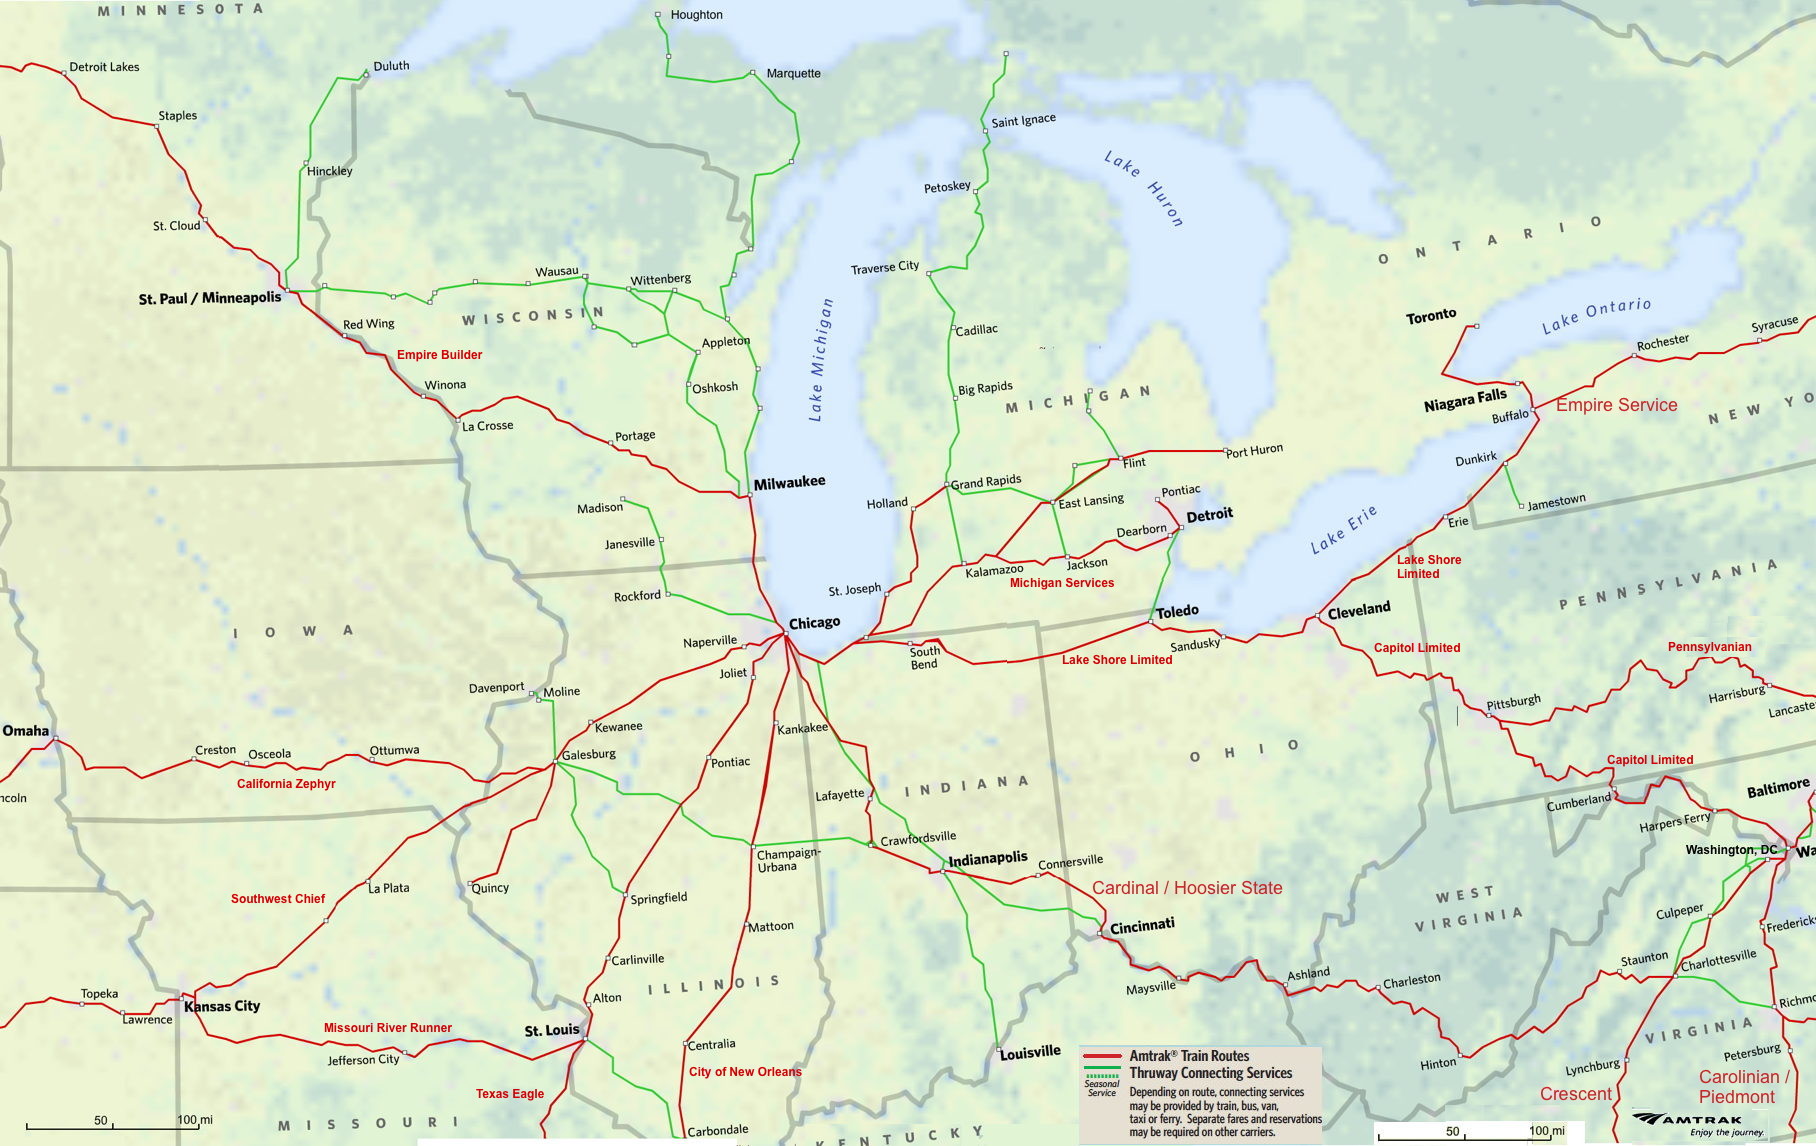 Midwest Amtrak Route Map, Alliance, OH (Canton); Cleveland, OH; Elyria, OH (Lorain); Sandusky, OH; Toledo, OH; Detroit, E. Lansing; Waterloo, IN (Ft. Wayne); Elkhart, IN; South Bend, IN; Chicago, IL-Union Station; Madison; Culpeper, VA; Charlottesville, VA; Richmond; Staunton, VA; Clifton Forge, VA (Homestead); White Sulphur Springs, WV; (Greenbrier); Alderson, WV; Hinton, WV; Prince, WV (Beckley); Thurmond, WV; Montgomery, WV; Charleston, WV; Huntington, WV; Ashland, KY (Kenova, WV); So. Portsmouth-So. Shore, KY; Maysville, KY; Cincinnati, OH-Union Terminal; Connersville, IN; Indianapolis, IN; Galesburg, Champaign, IN; Crawfordsville, IN; Lafayette, IN; Rensselaer, IN; Dyer, IN; Chicago, IL-Union Station; Kankakee, IL; Champaign-Urbana, IL; Mattoon, IL; Centralia, IL; Pontiac, IL; Carlinville, IL; Alton, IL; St. Louis, MO; Milwaukee, WI; Portage, WI; La Crosse, WI; Winona, MN; South Bend, IN; Toledo, OH; Cleveland, OH; Erie, PA; Dunkirk, NY; Buffalo, NY; Niagara Falls, NY; Toronto, Canada; Rochester, NY; Syracuse, NY; Kalamazoo, MI; Jackson, MI; Dearborn, MI; Detroit, MI; East Lansing, MI; Flint, MI; Port Huron, MI; Grand Rapids, MI; St. Joseph, MI; Holland, MI; ROchester; Red Wing, MN; Minneapolis, MN; St. Paul, MN; St. Cloud, MN; Staples, MN; Detroit Lakes, MN; Washington, DC; Charlottesville, VA; Rockville, MD; Harpers Ferry, WV (Frederick, MD); Martinsburg, WV (Hagerstown); Cumberland, MD; Connellsville, PA; Pittsburgh, PA;  Jefferson City, MO; Kansas City, MO; Topeka, KS; Lawrence, KS; Omaha, NE; Osceola, IA; Creston, IA; Ottumwa, IA; La Plata, MO; California Zephyr, Capitol Limited, Cardinal / Hoosier State, City of New Orleans, Empire Builder, Hiawatha, Illinois Services, Lake Shore Limited, Michigan Services, Missouri River Runner, Southwest Chief, Texas Eagle 